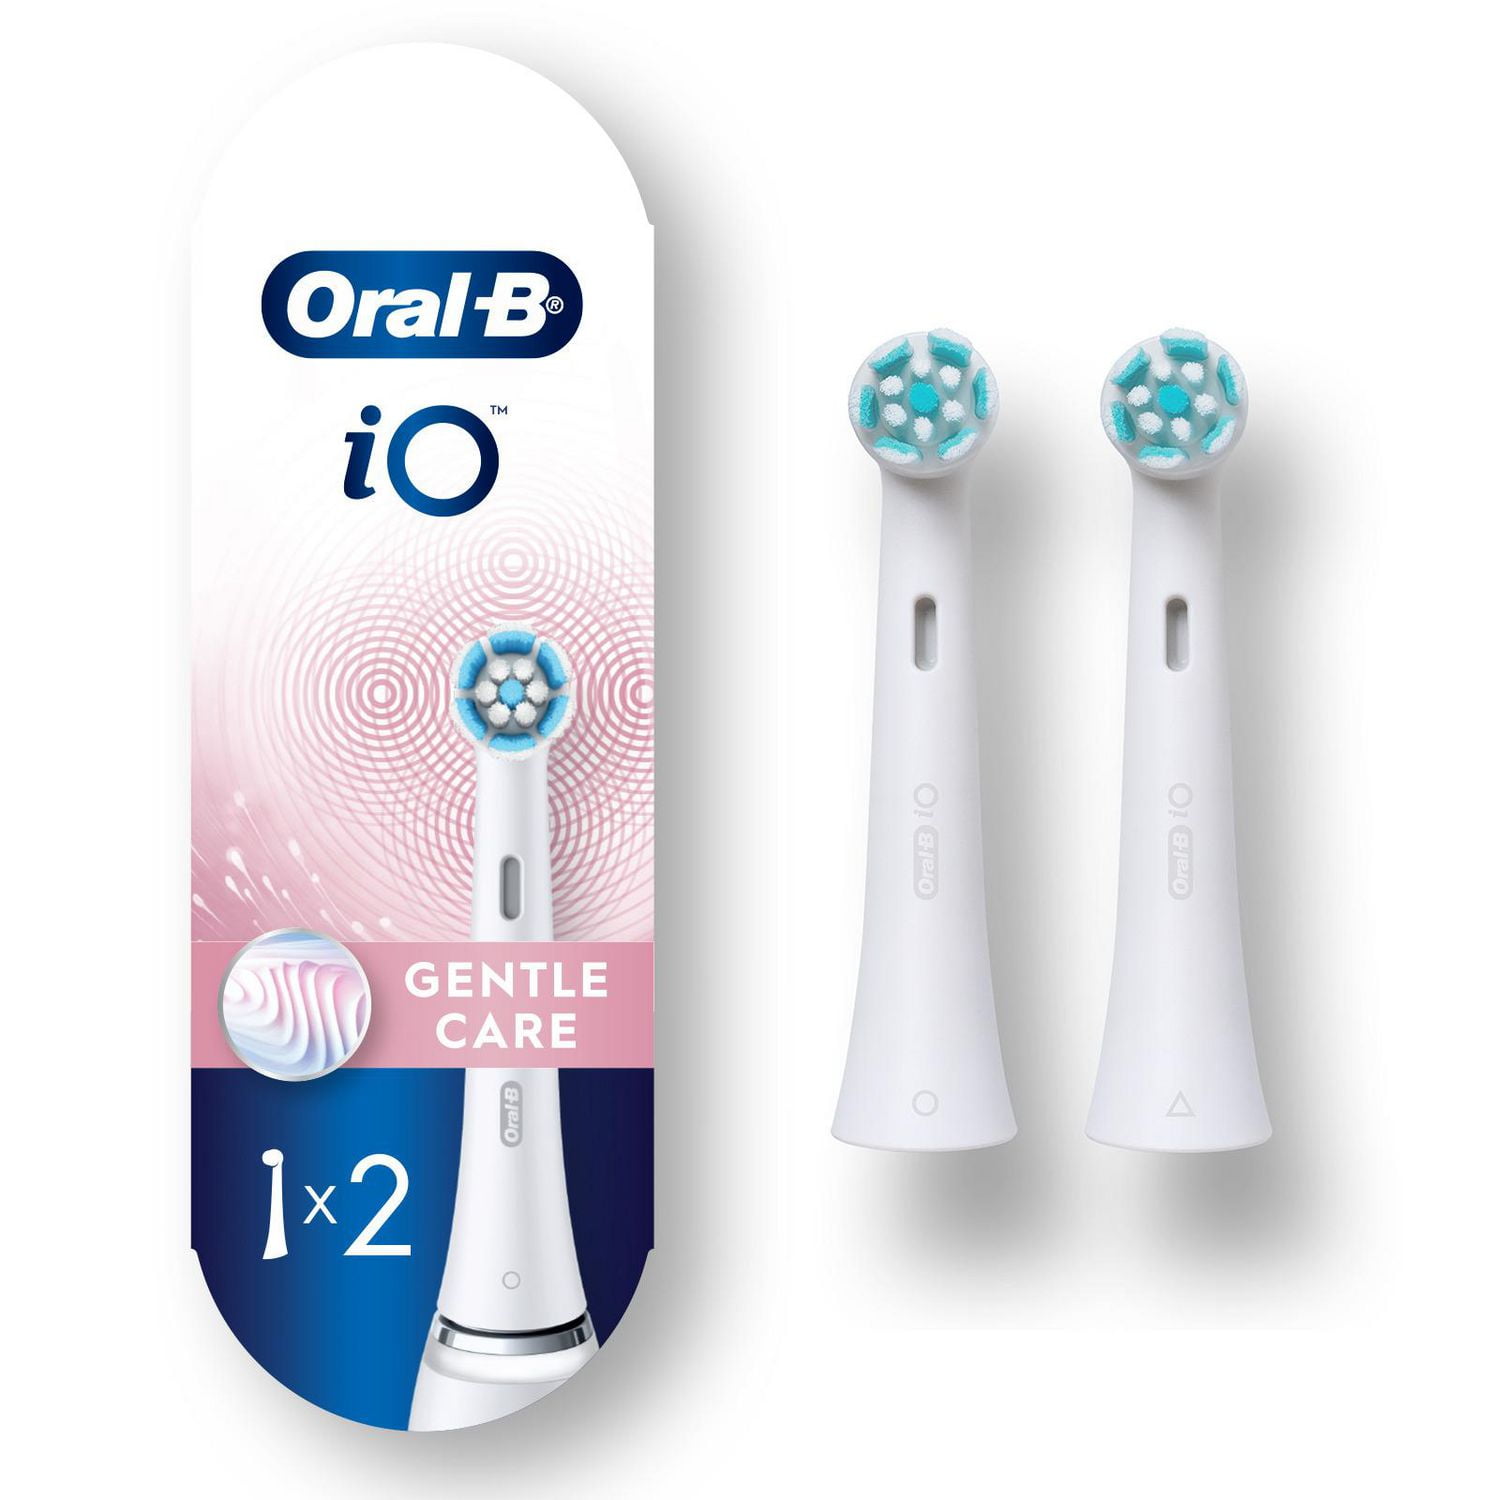 Buy Oral B Power Toothbrush Variety Refills 4 Pack Online at